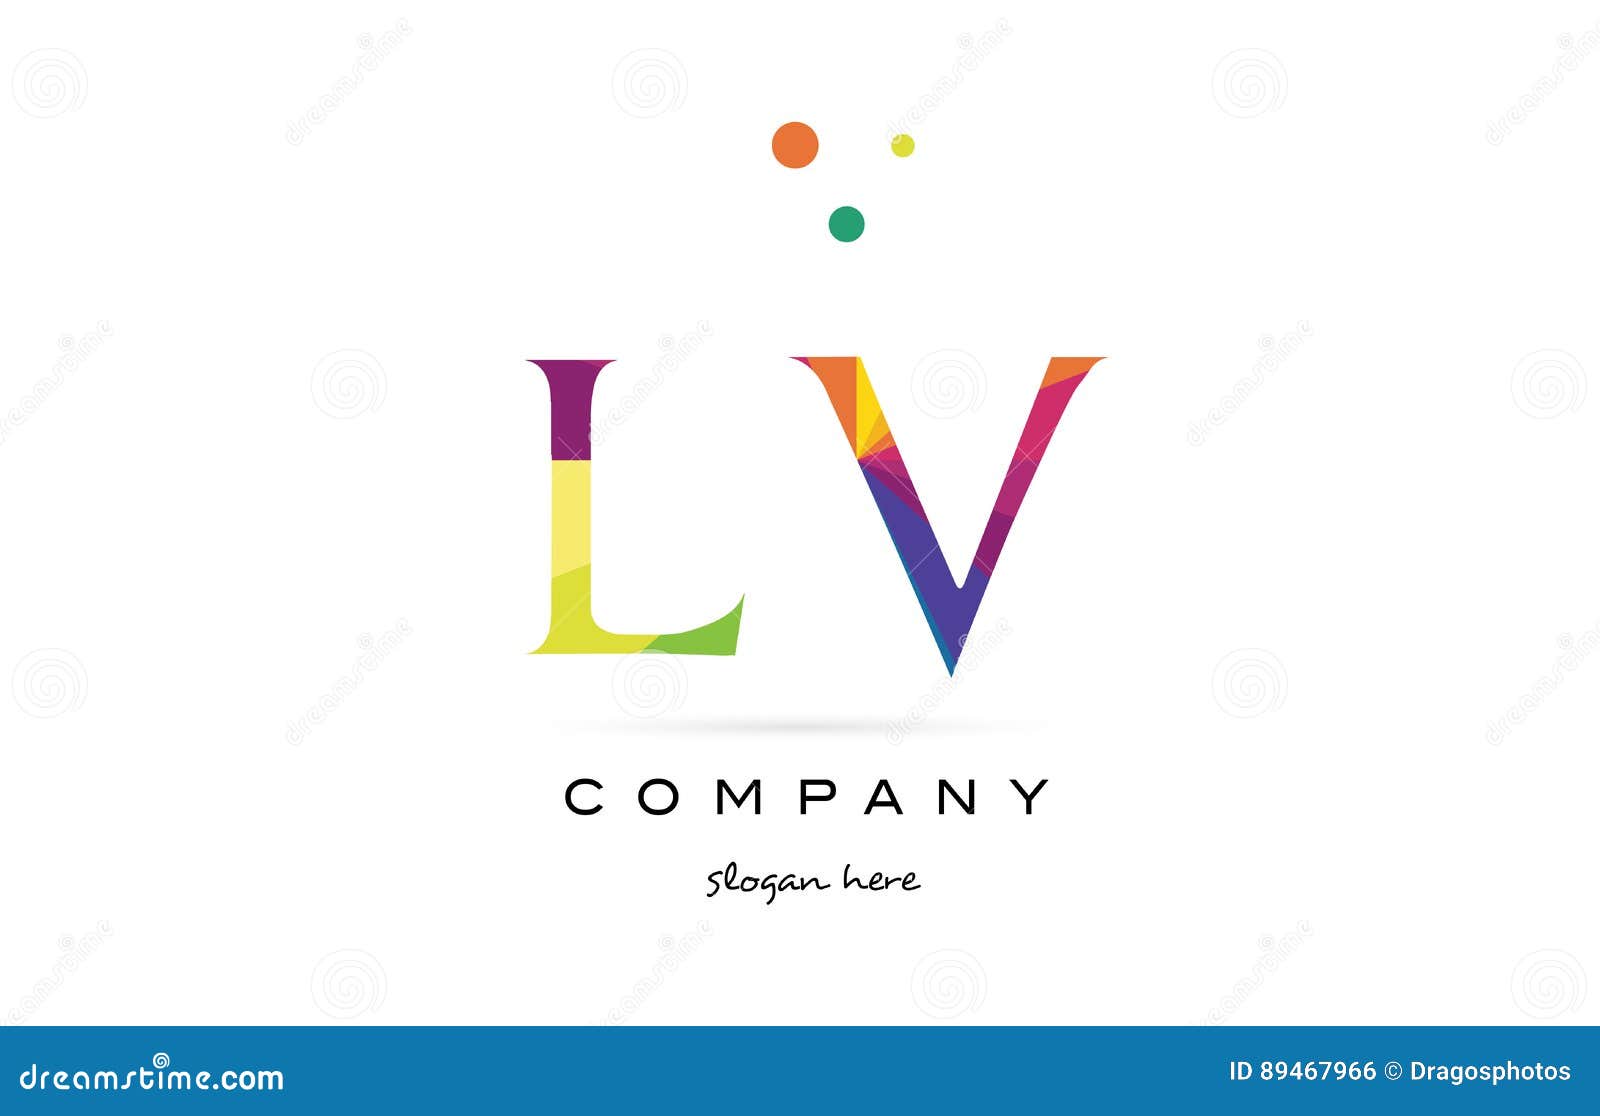 Lv L V Creative Rainbow Colors Alphabet Letter Logo Icon Stock Vector - Illustration of orange ...